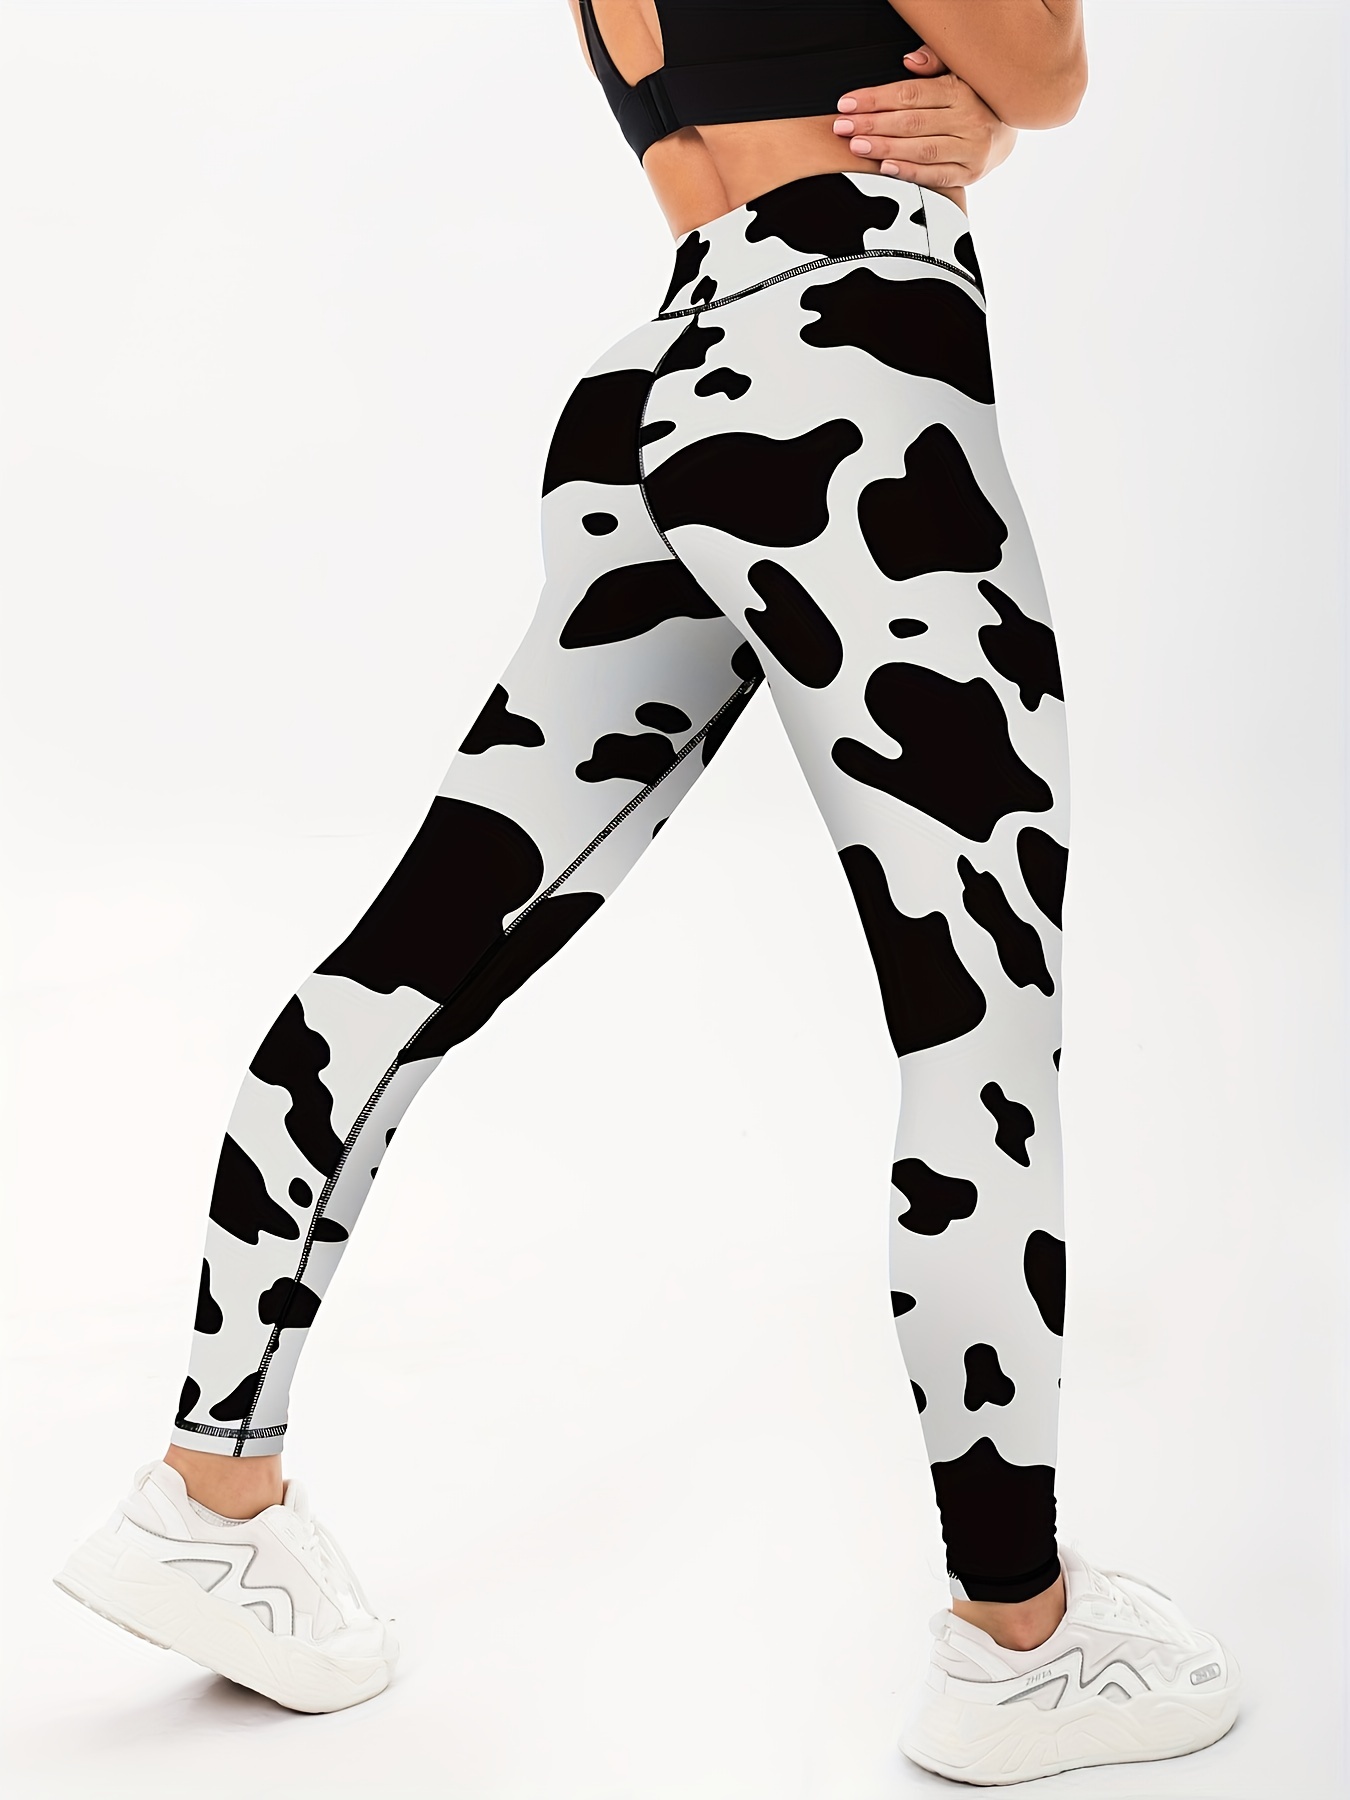 Buy Cow Leggings, Sports Leggings, High-waisted, Cow Print, Gym